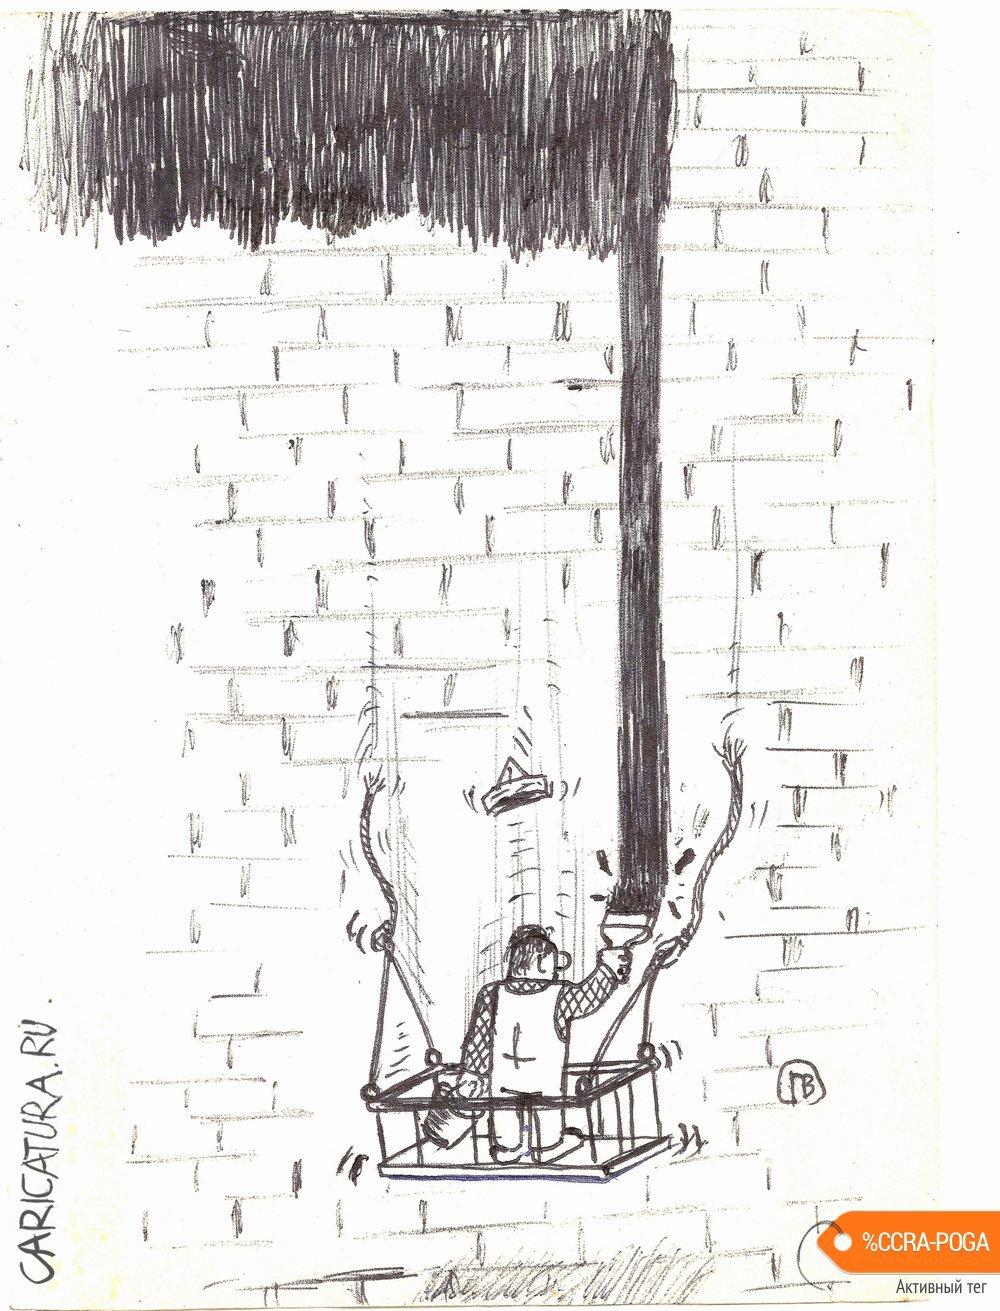 Карикатура "Маляр", Виктор Полуэктов